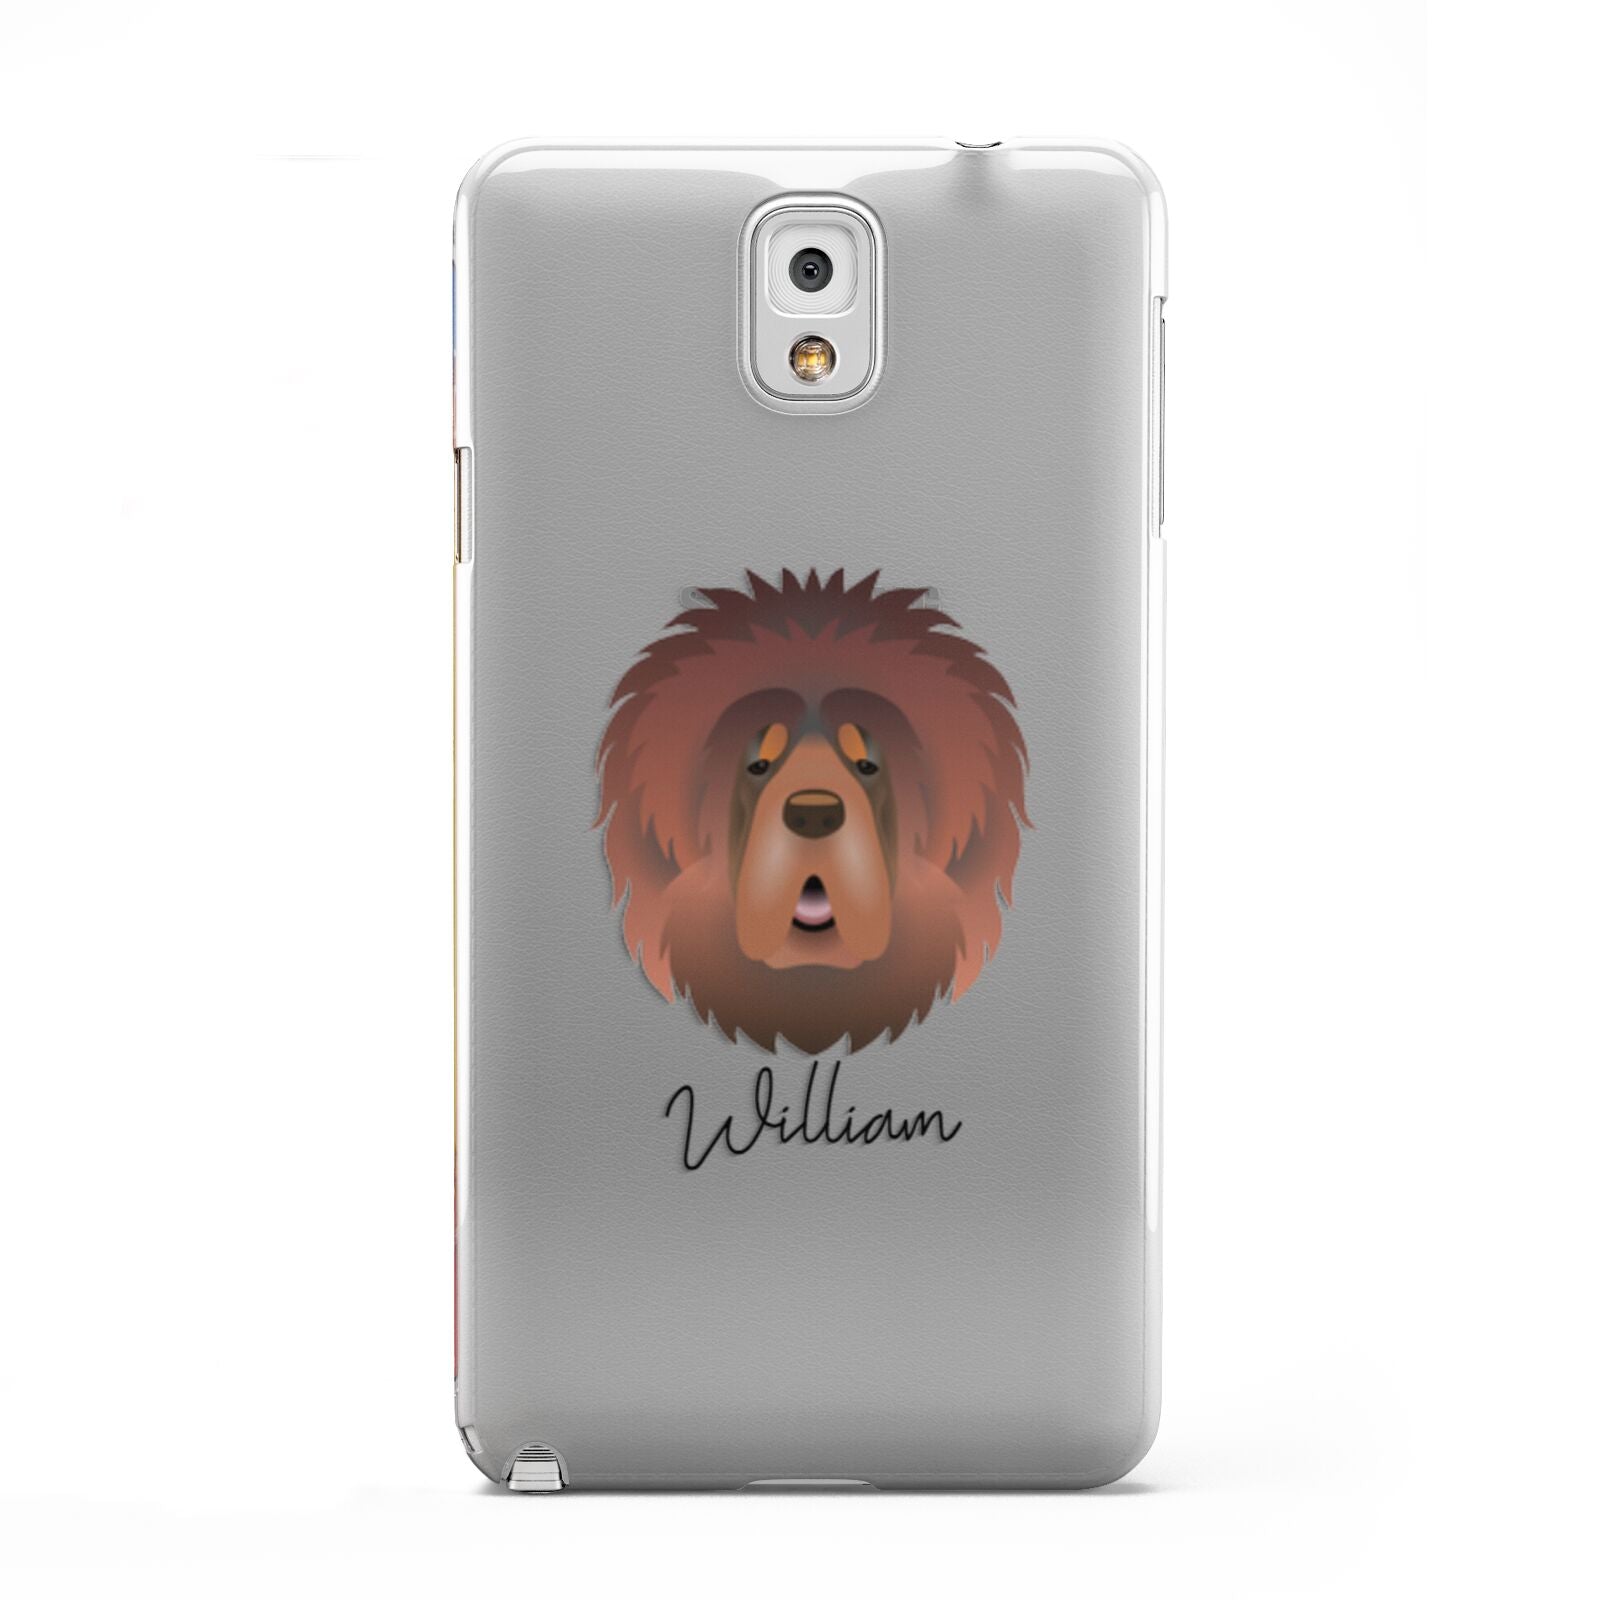 Tibetan Mastiff Personalised Samsung Galaxy Note 3 Case